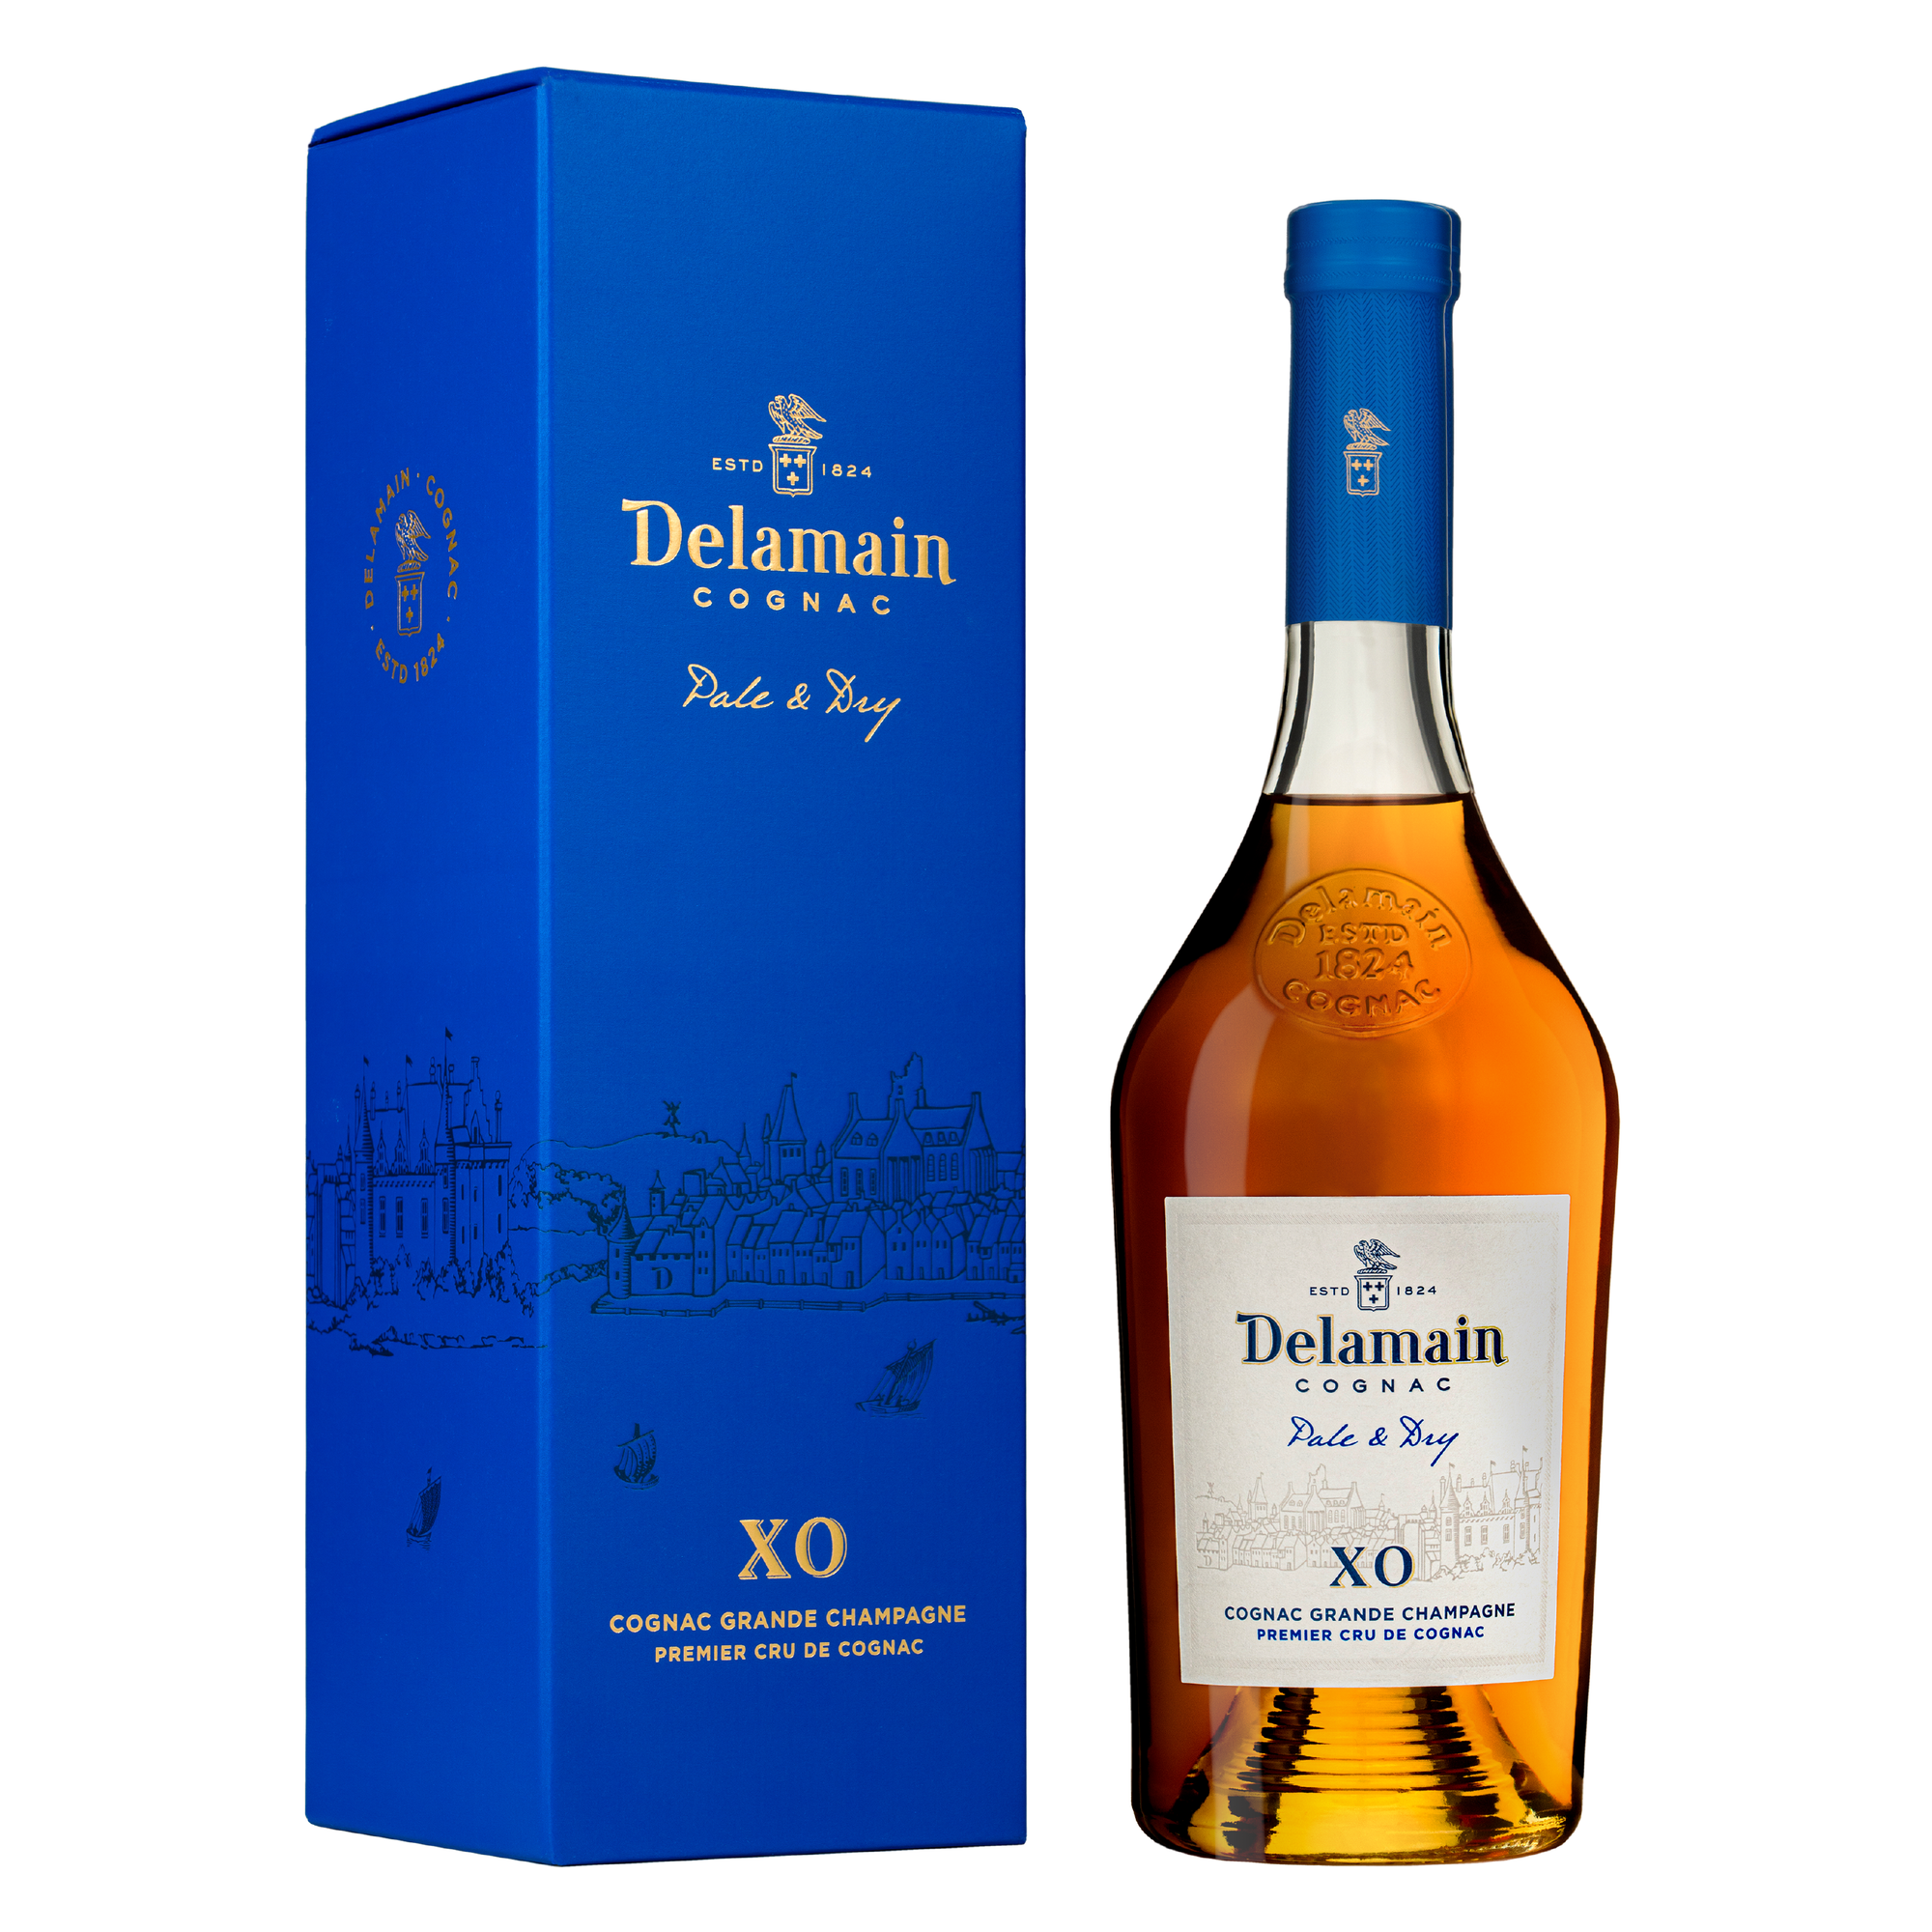 DELAMAIN Cognac "Pale & Dry XO" - 150cl with Gift Box